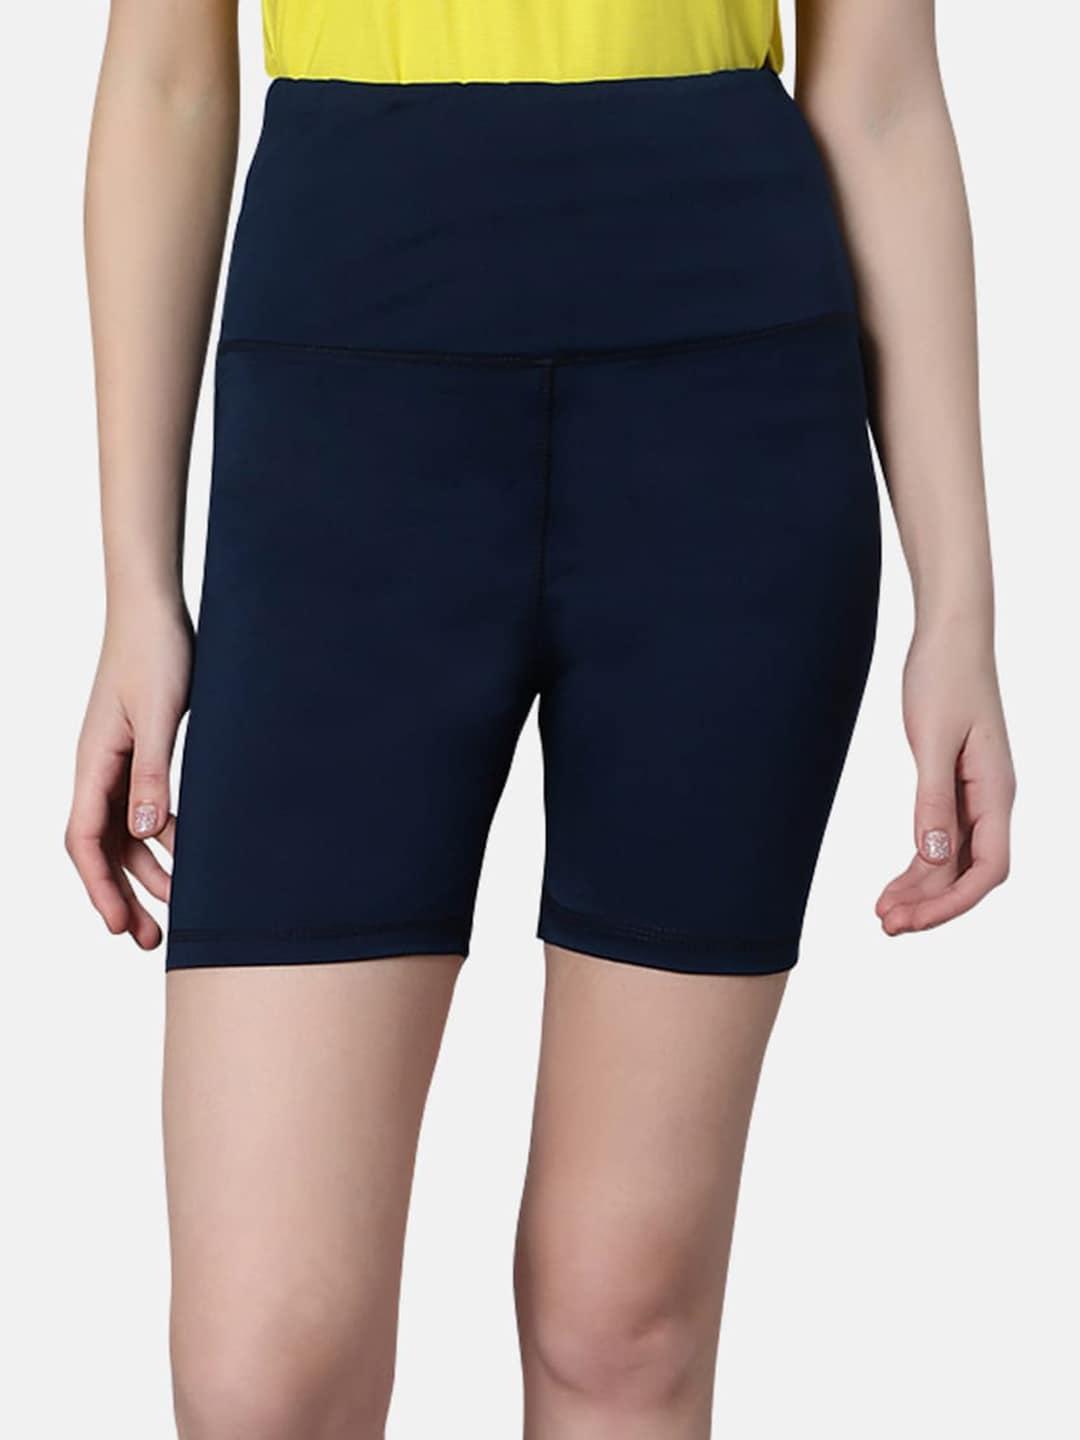 omtex-women-skinny-fit-high-rise-sports-shorts